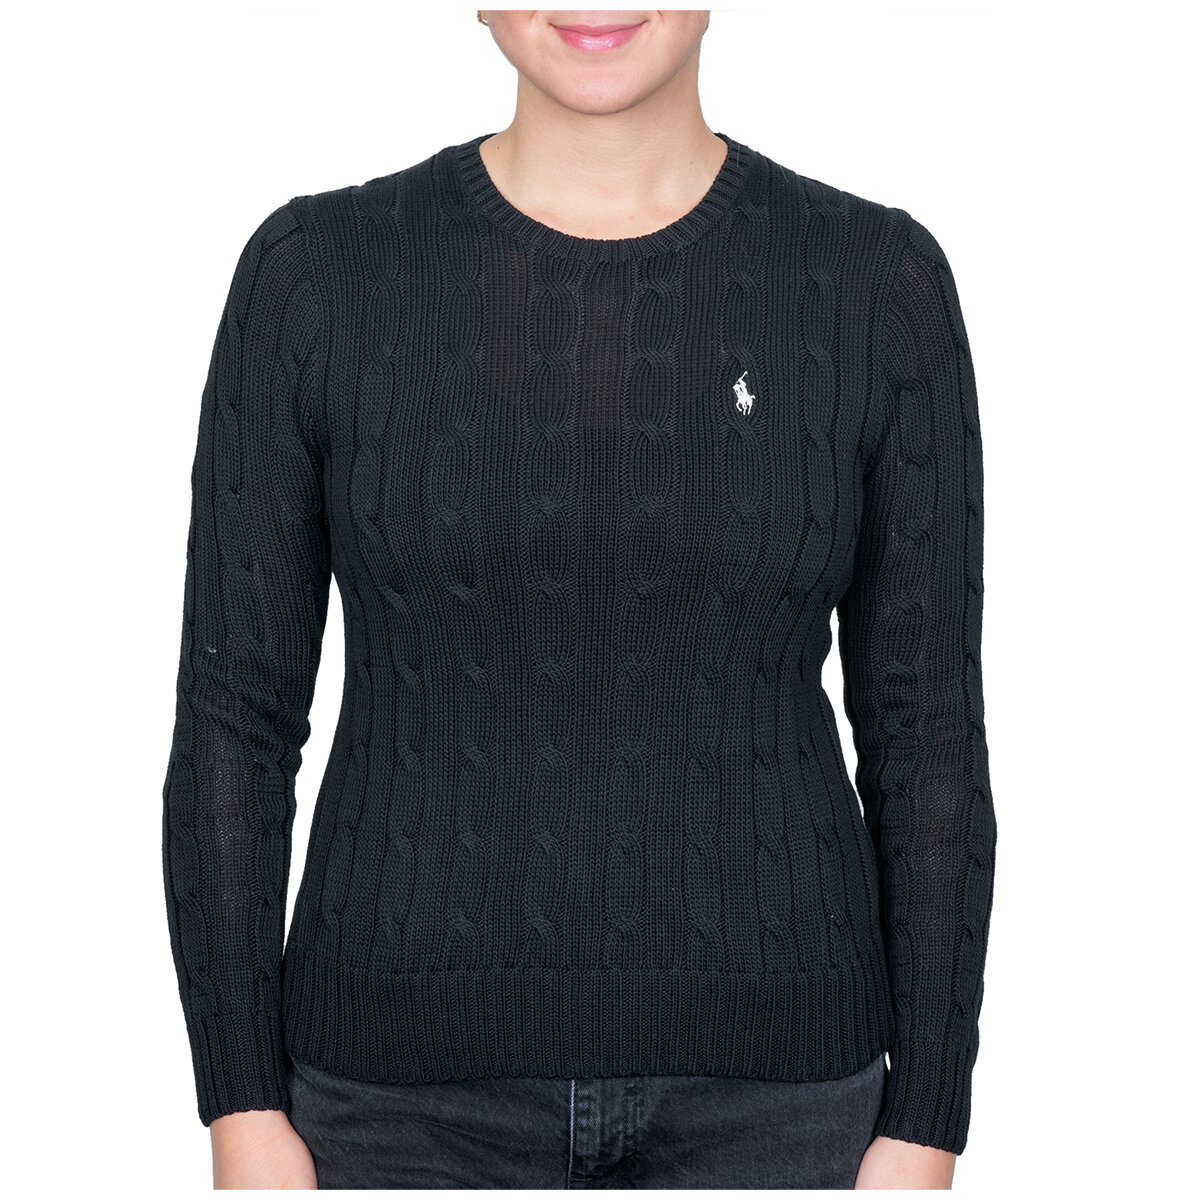 Ralph Lauren Cable Knit Sweater Womens Deals | website.jkuat.ac.ke